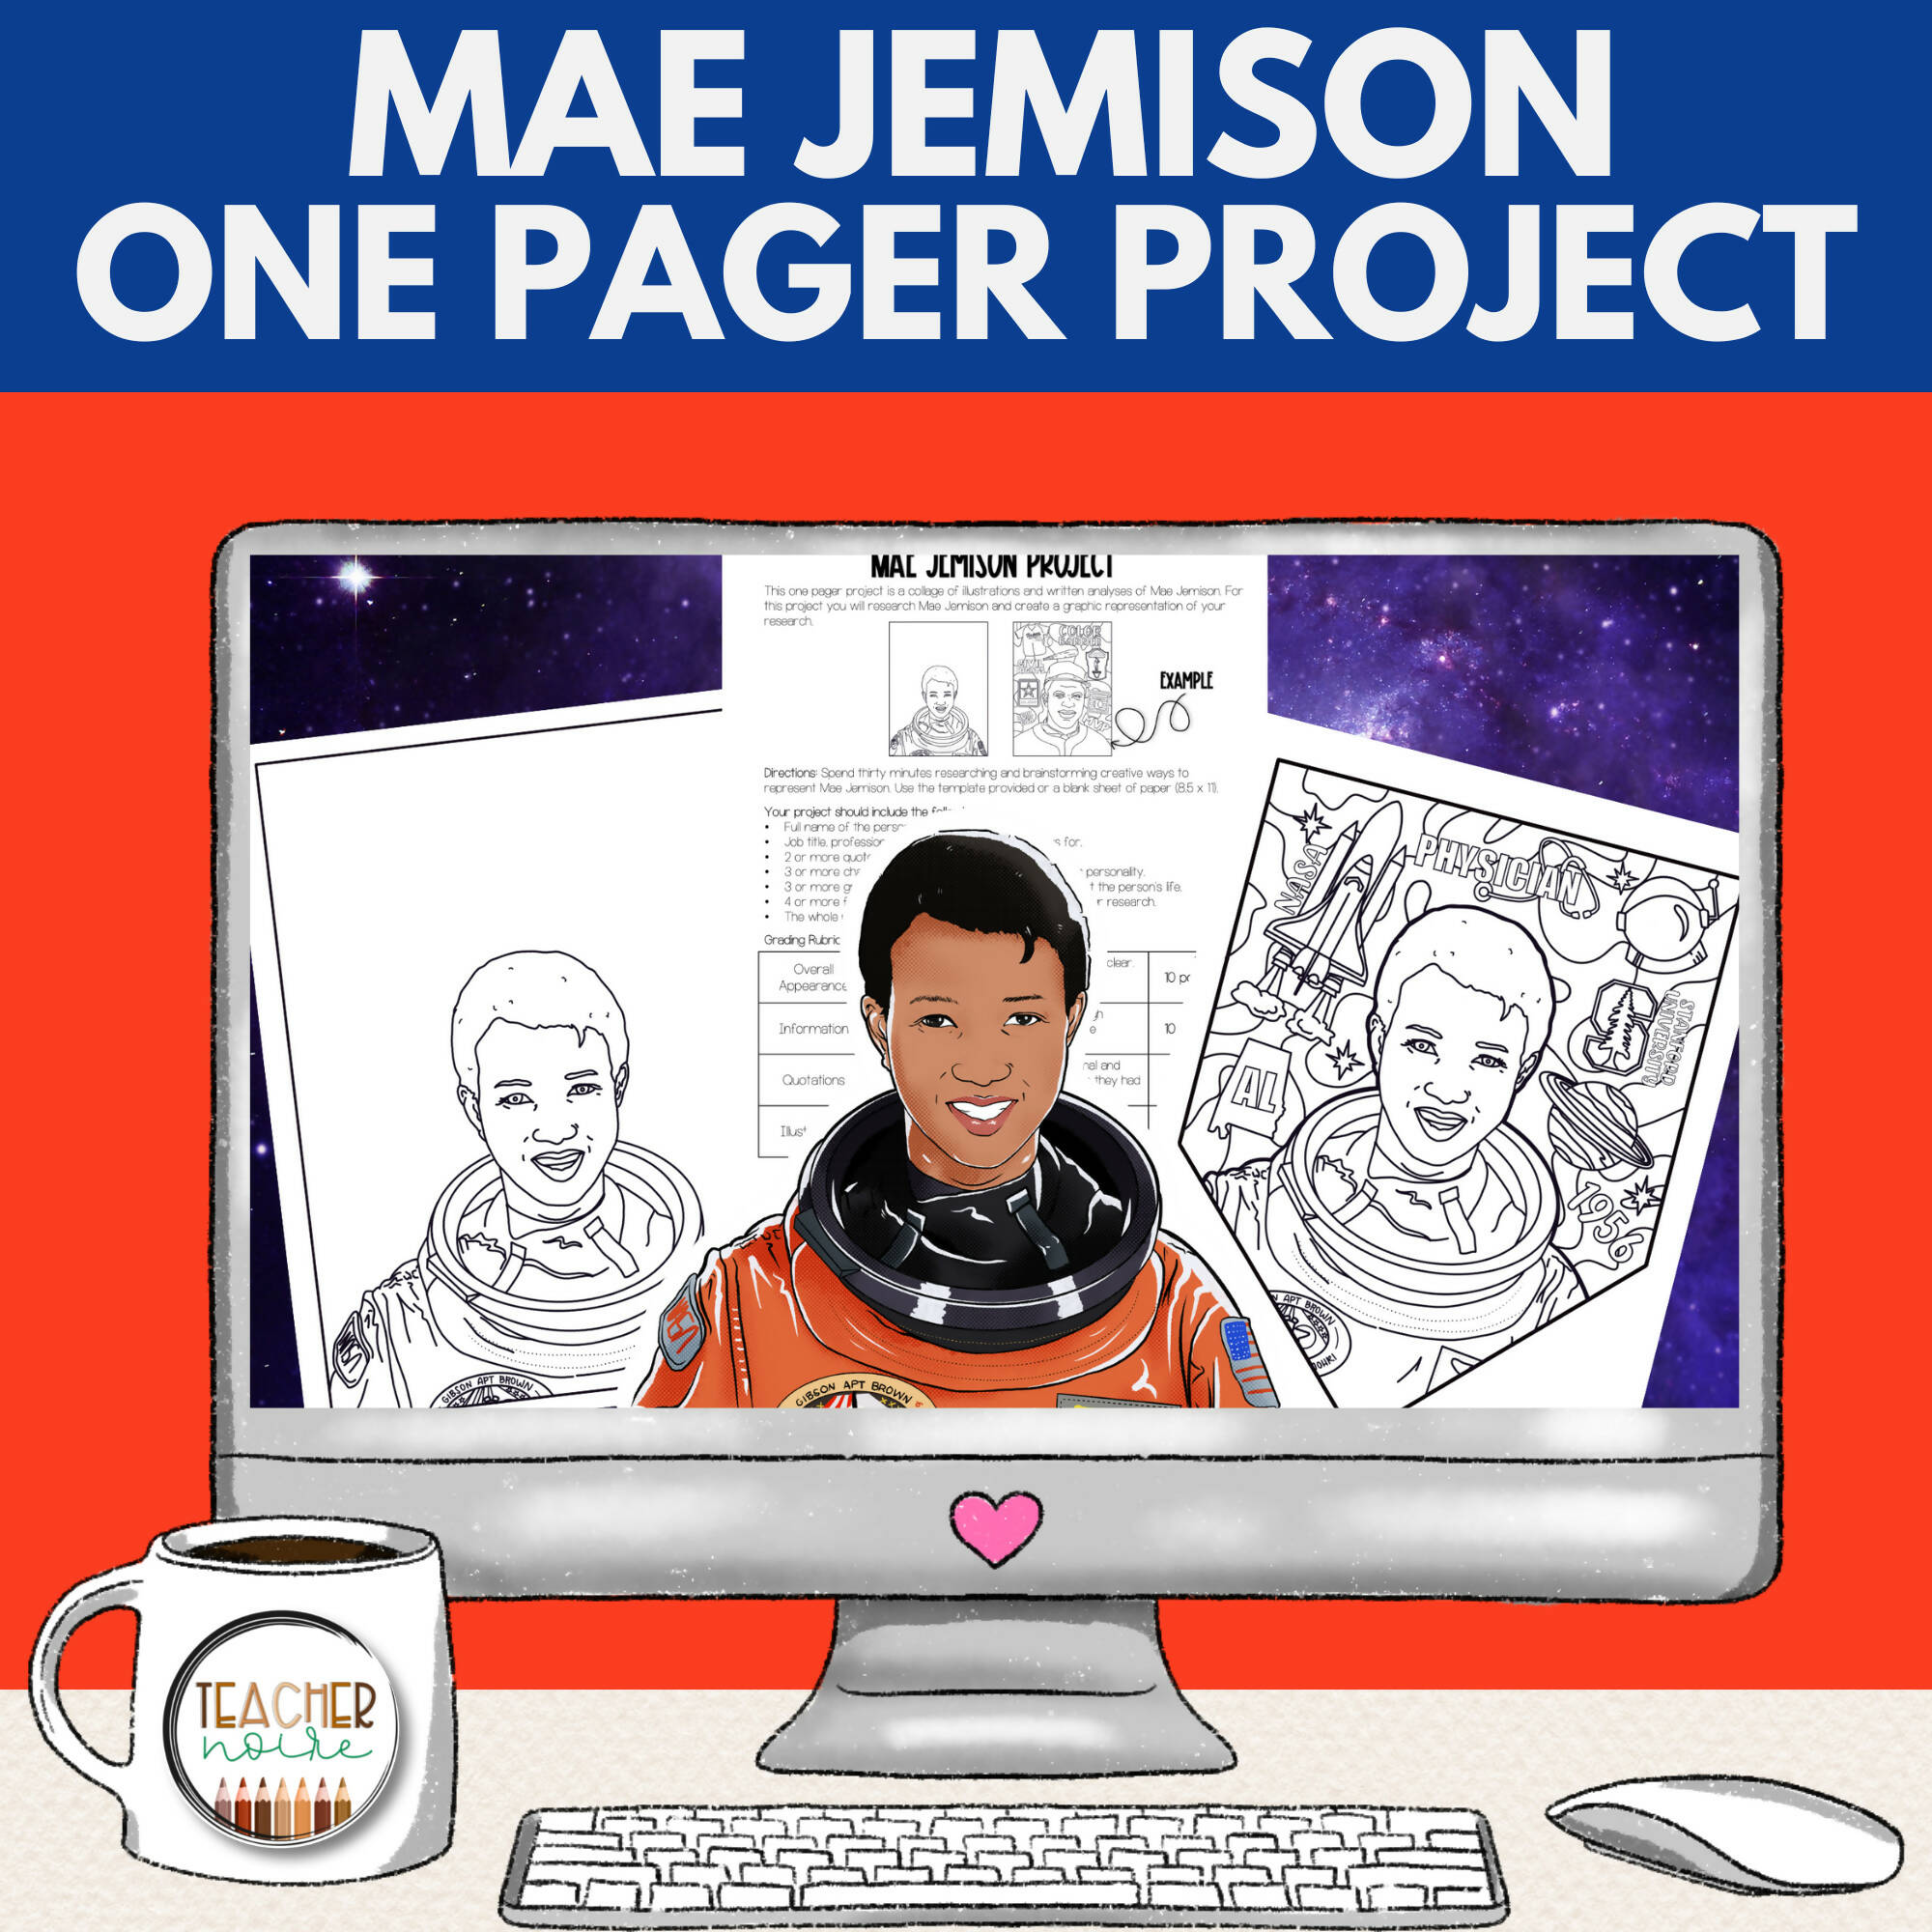 Mae jemison biography project printable teacher resource teacher n â schoolgirl style